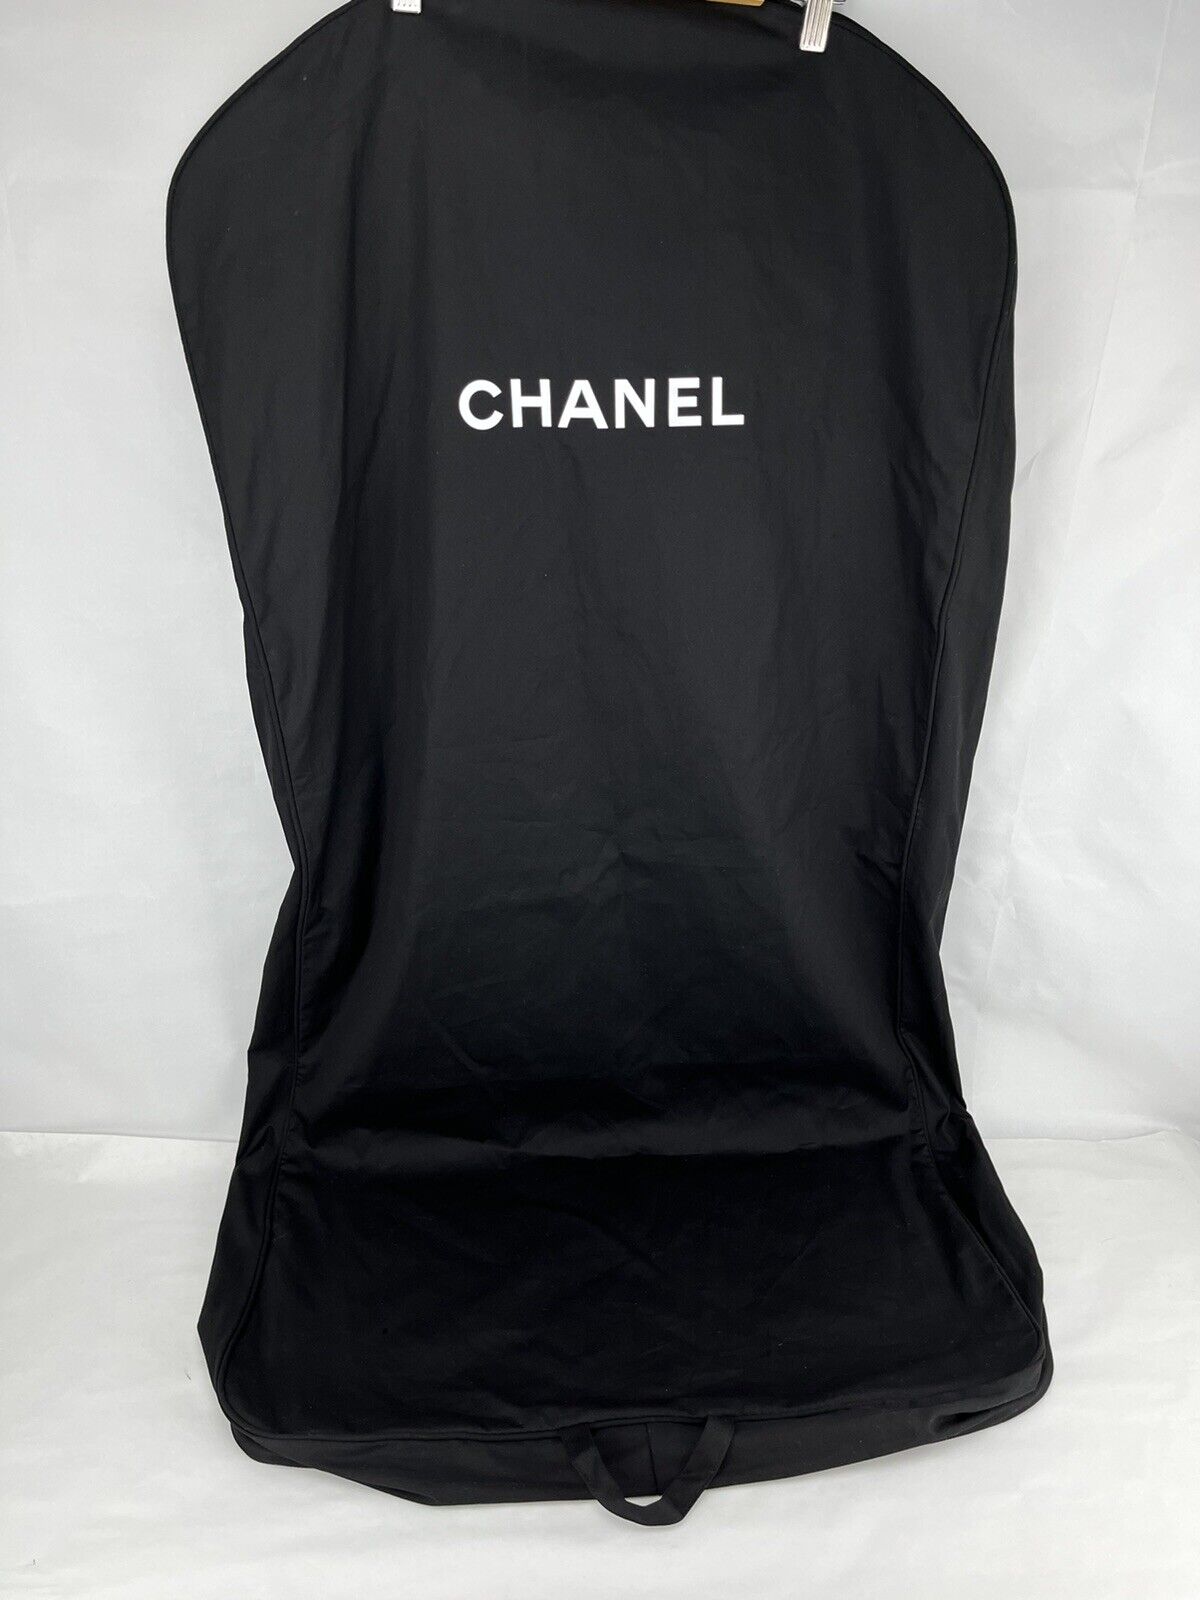 Chanel Authentic Black Garment Bag Travel Clothes Cover 49”x23”x4”